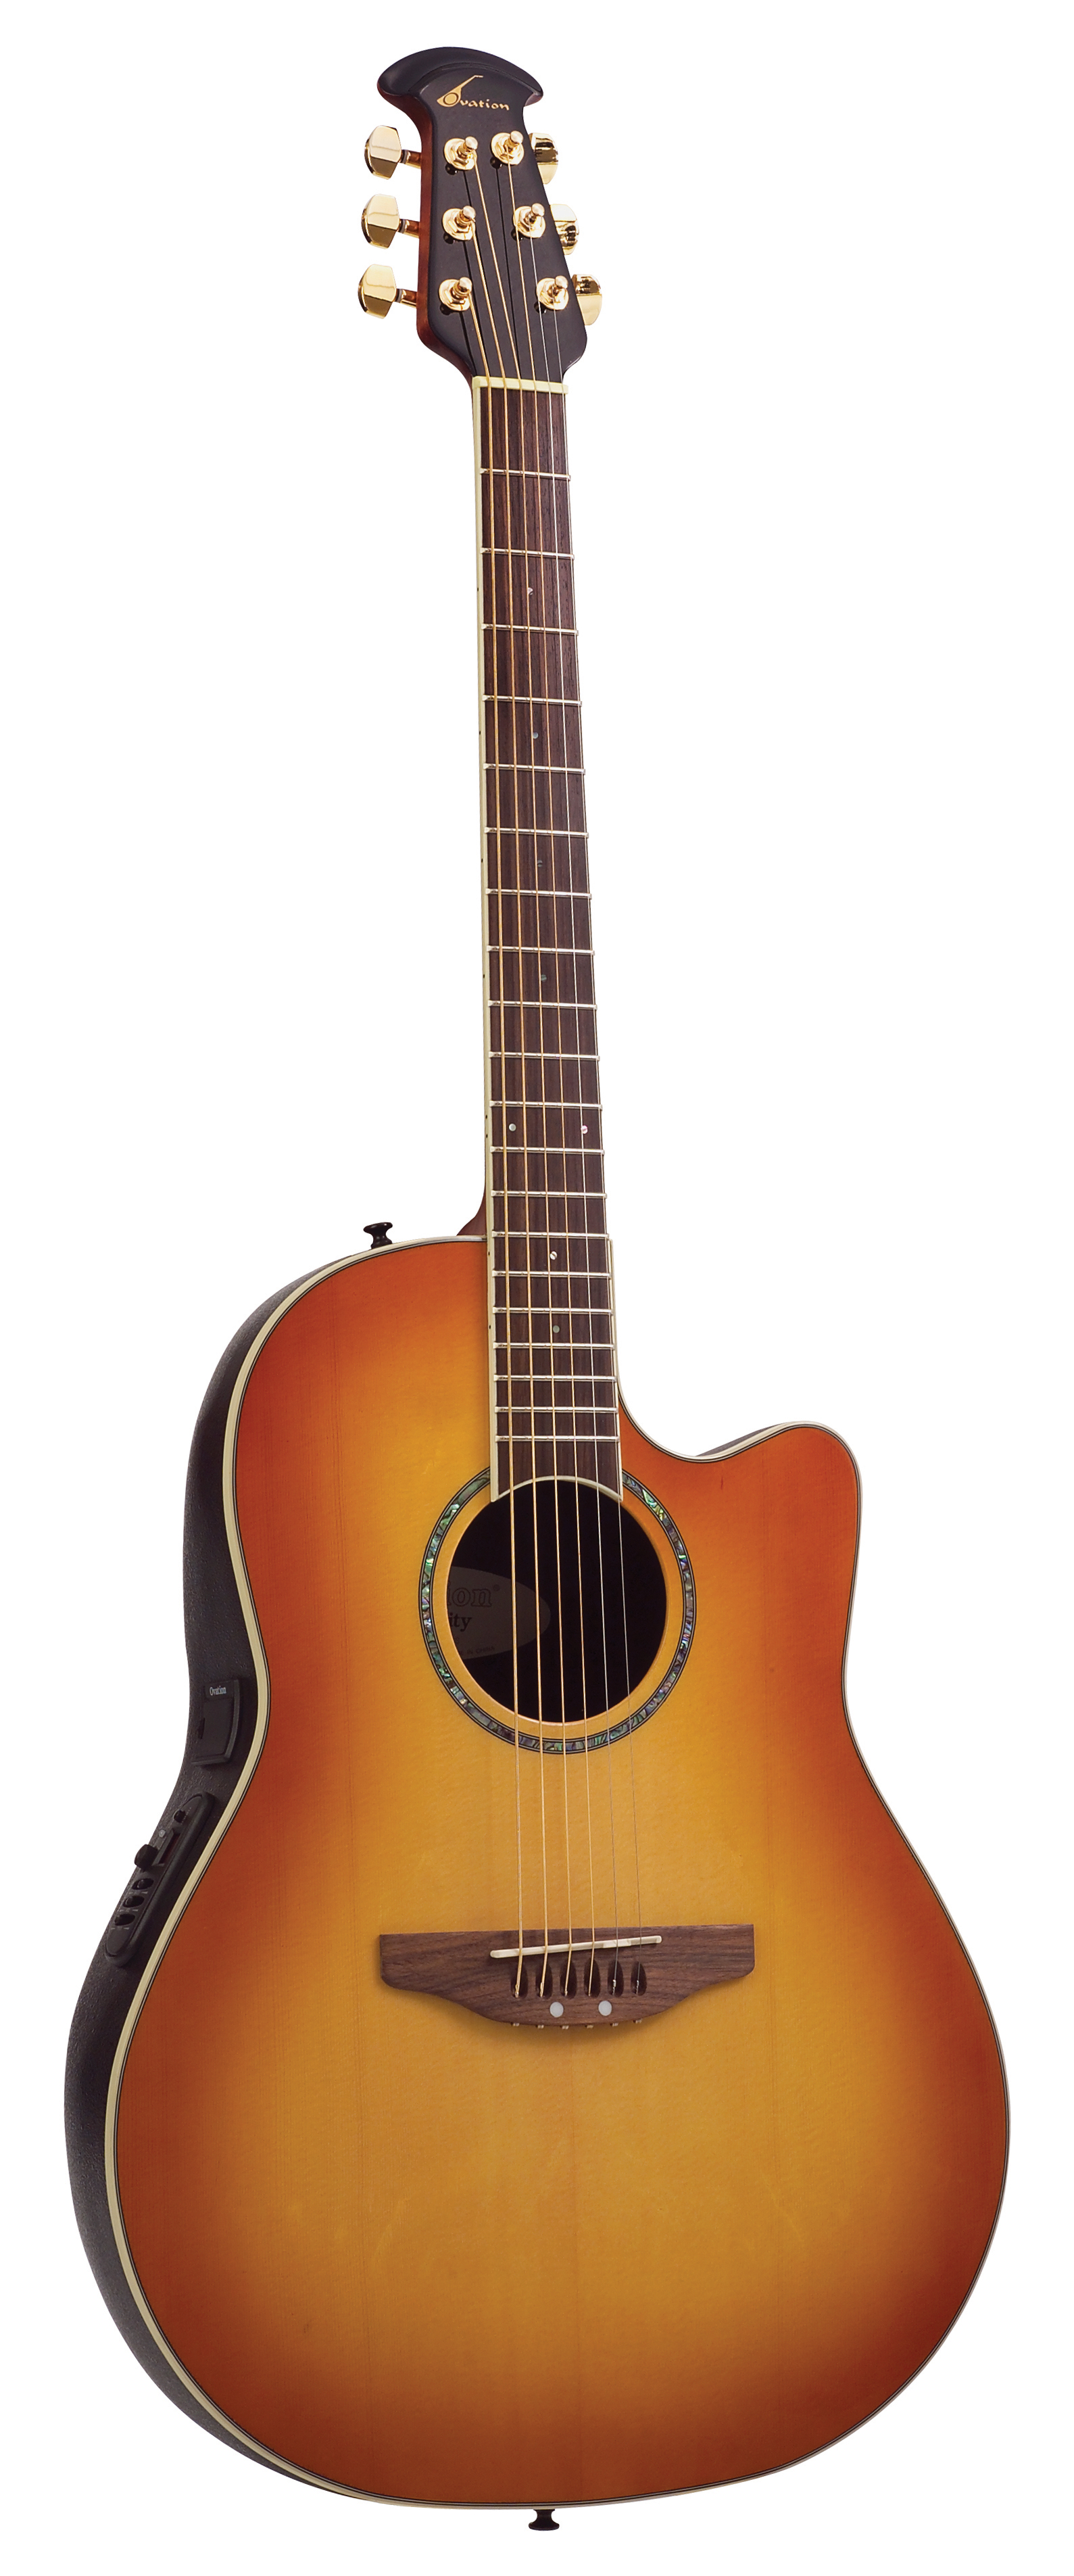 Ovation Ovation Celebrity CC24S Cutaway Acoustic-Electric Guitar - Tuscan Tan Burst